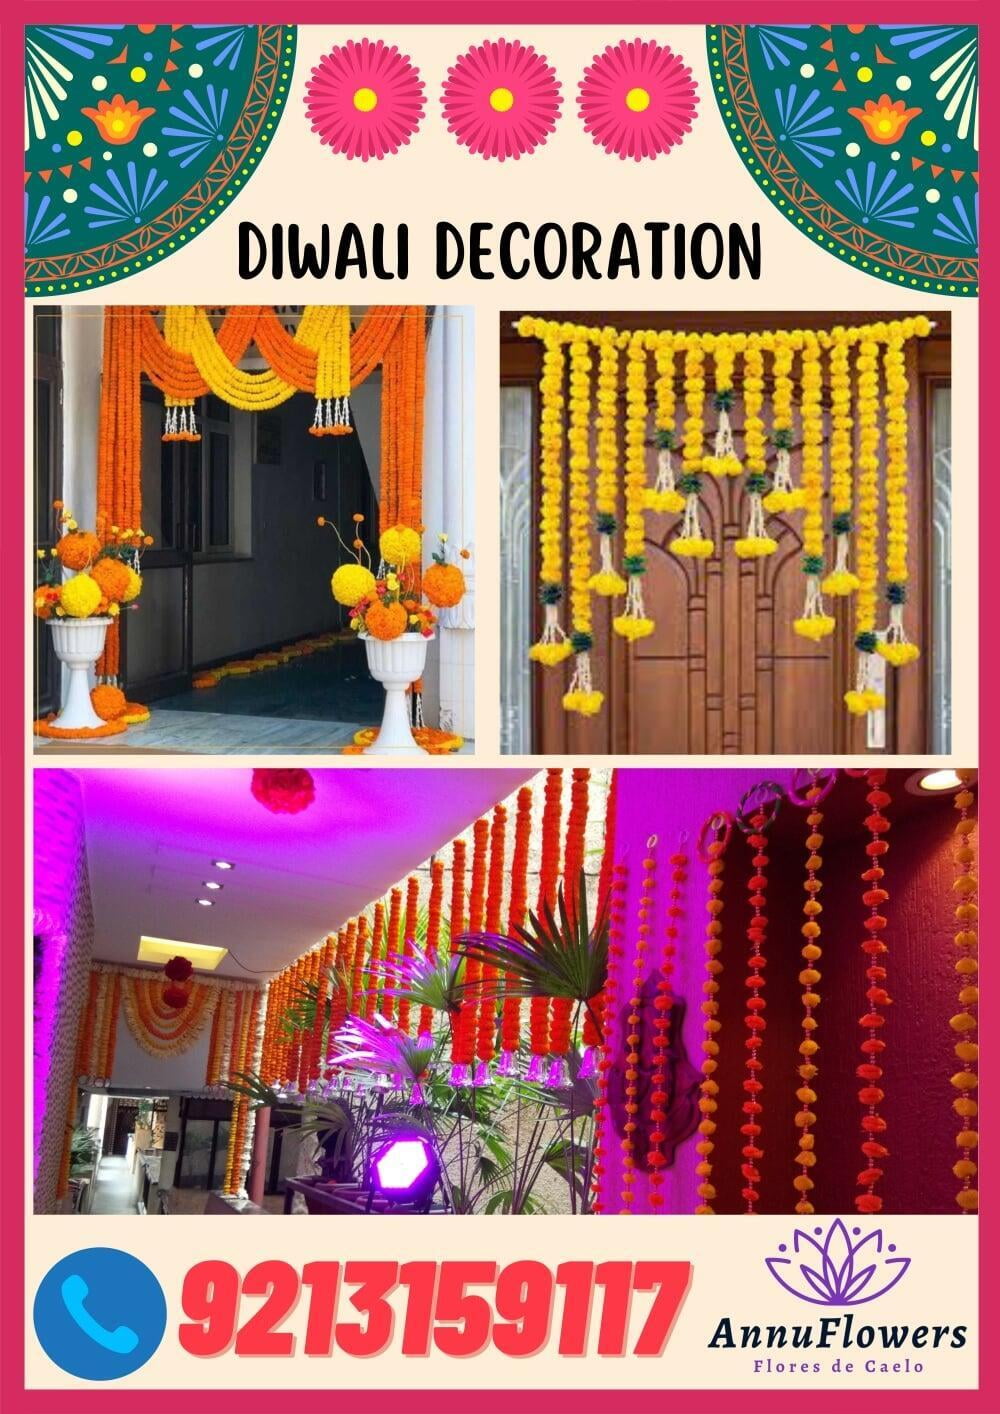 Diwali Decoration Call 9213159117